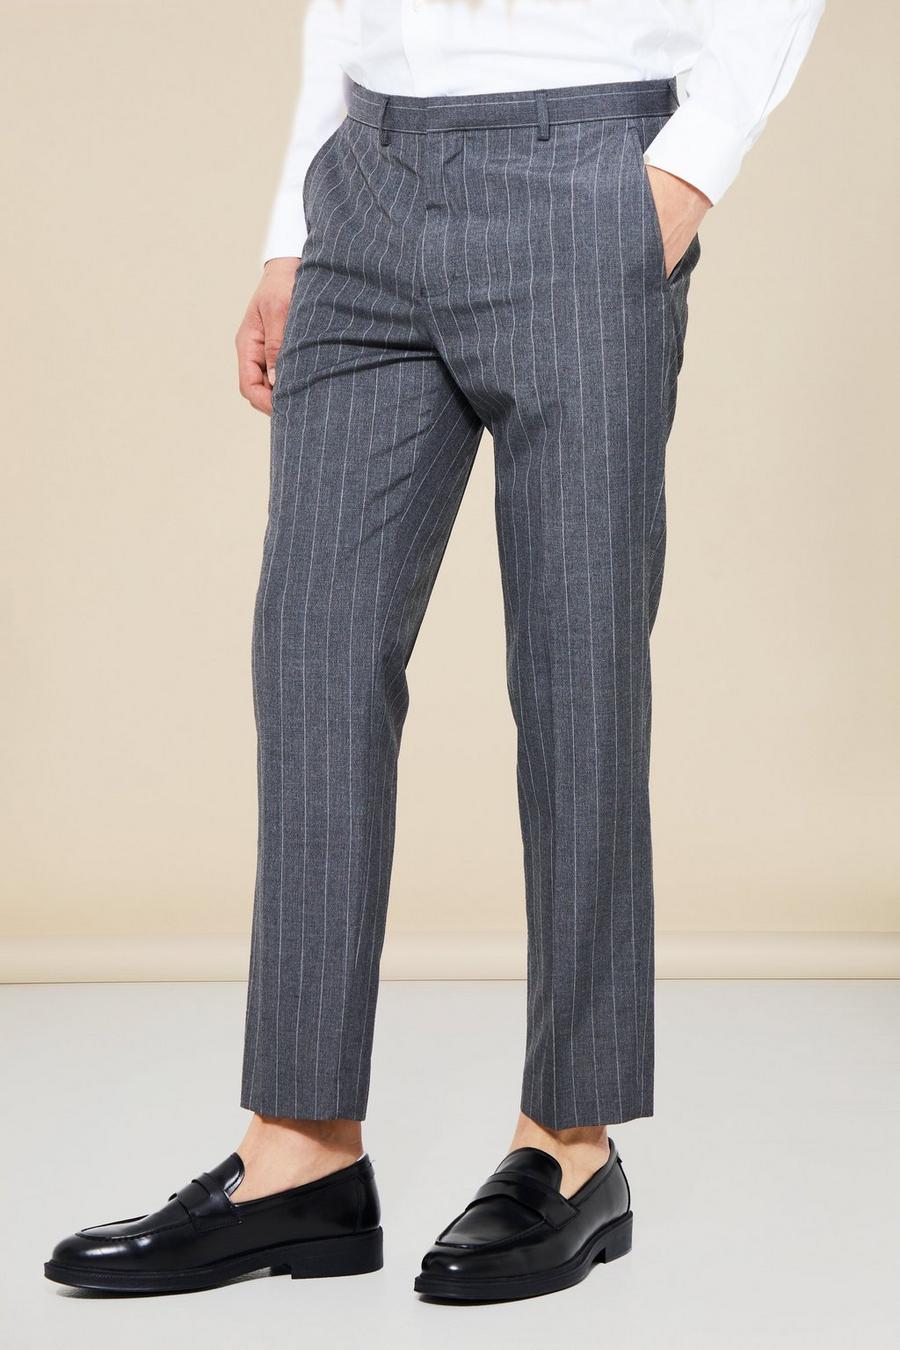 Pantaloni sartoriali Slim Fit a righe verticali, Dark grey grigio